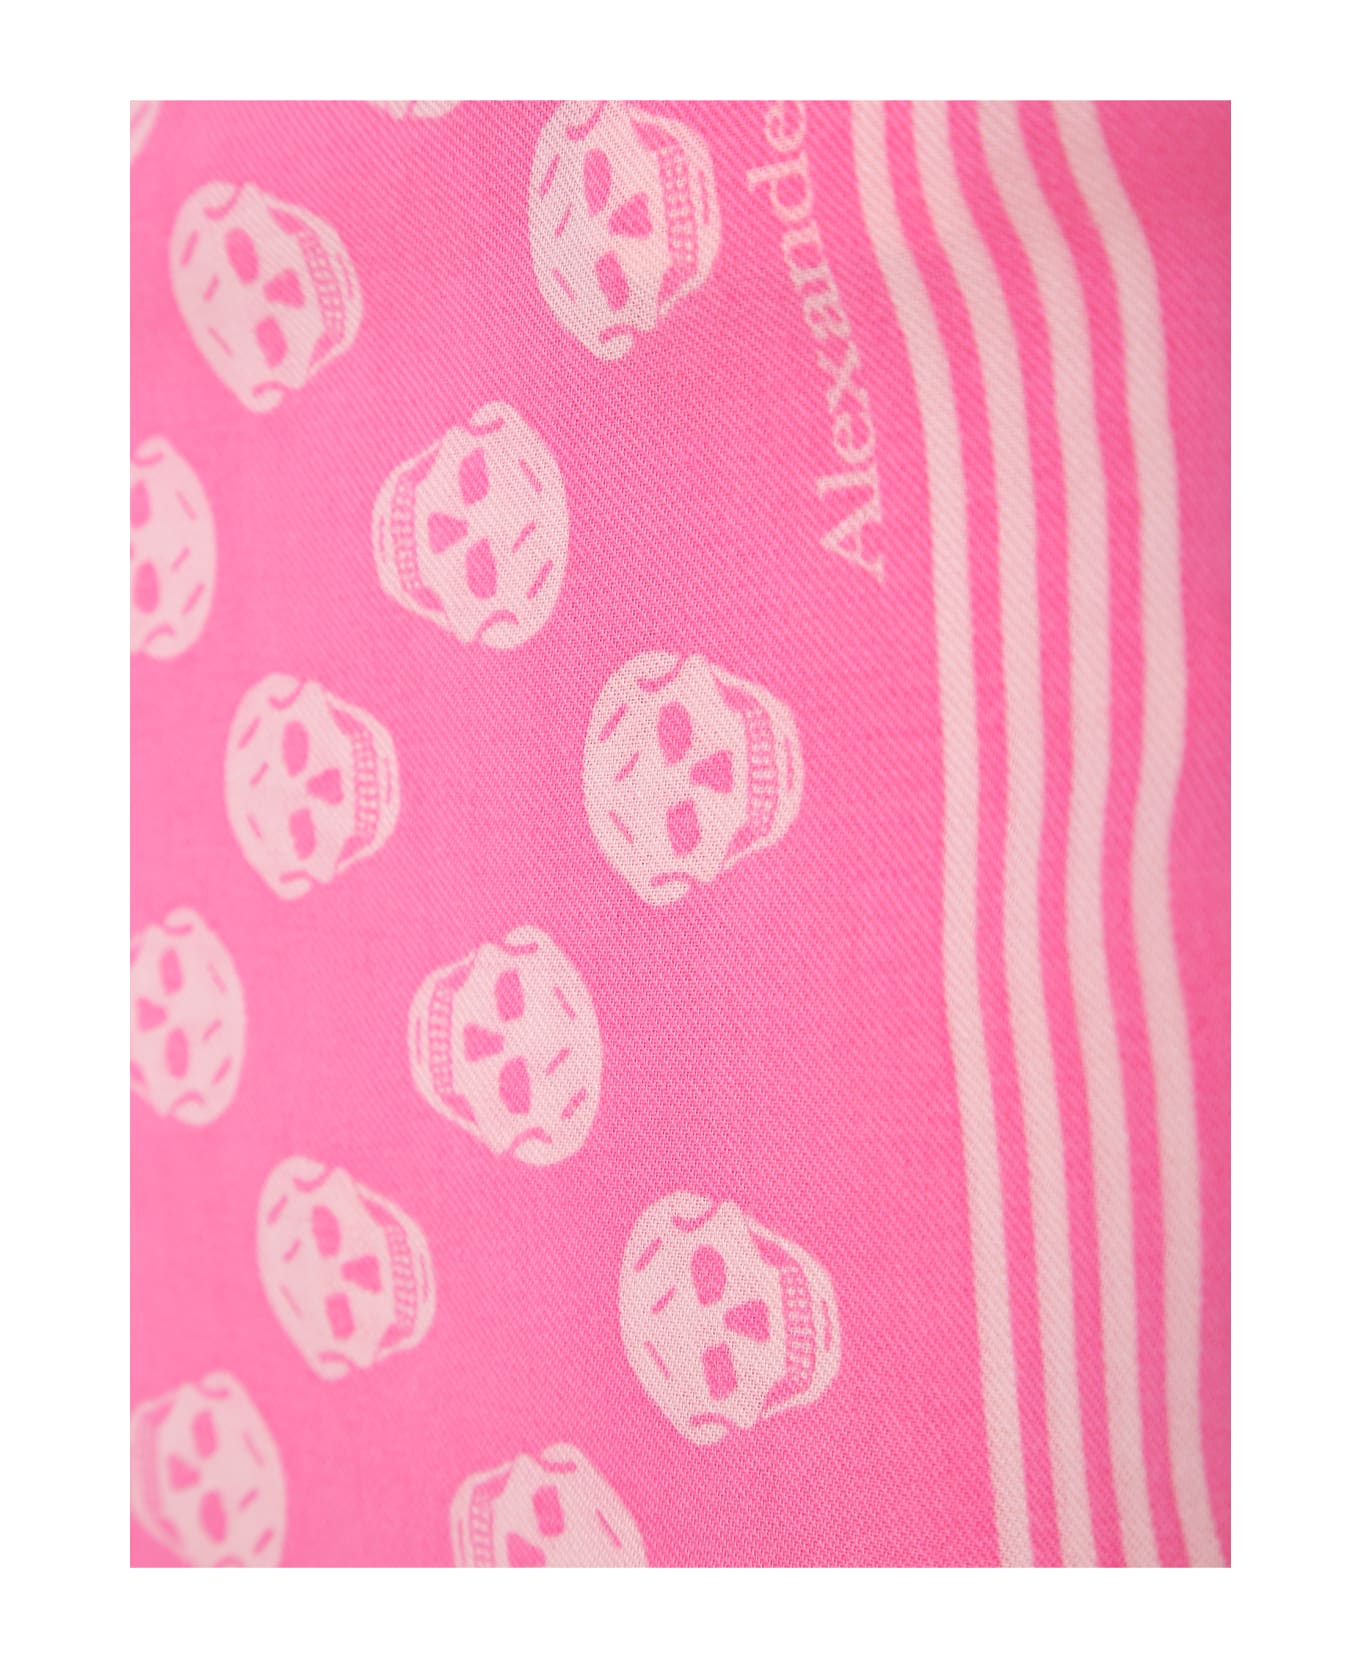 Alexander McQueen Skull Scarf - Pink スカーフ